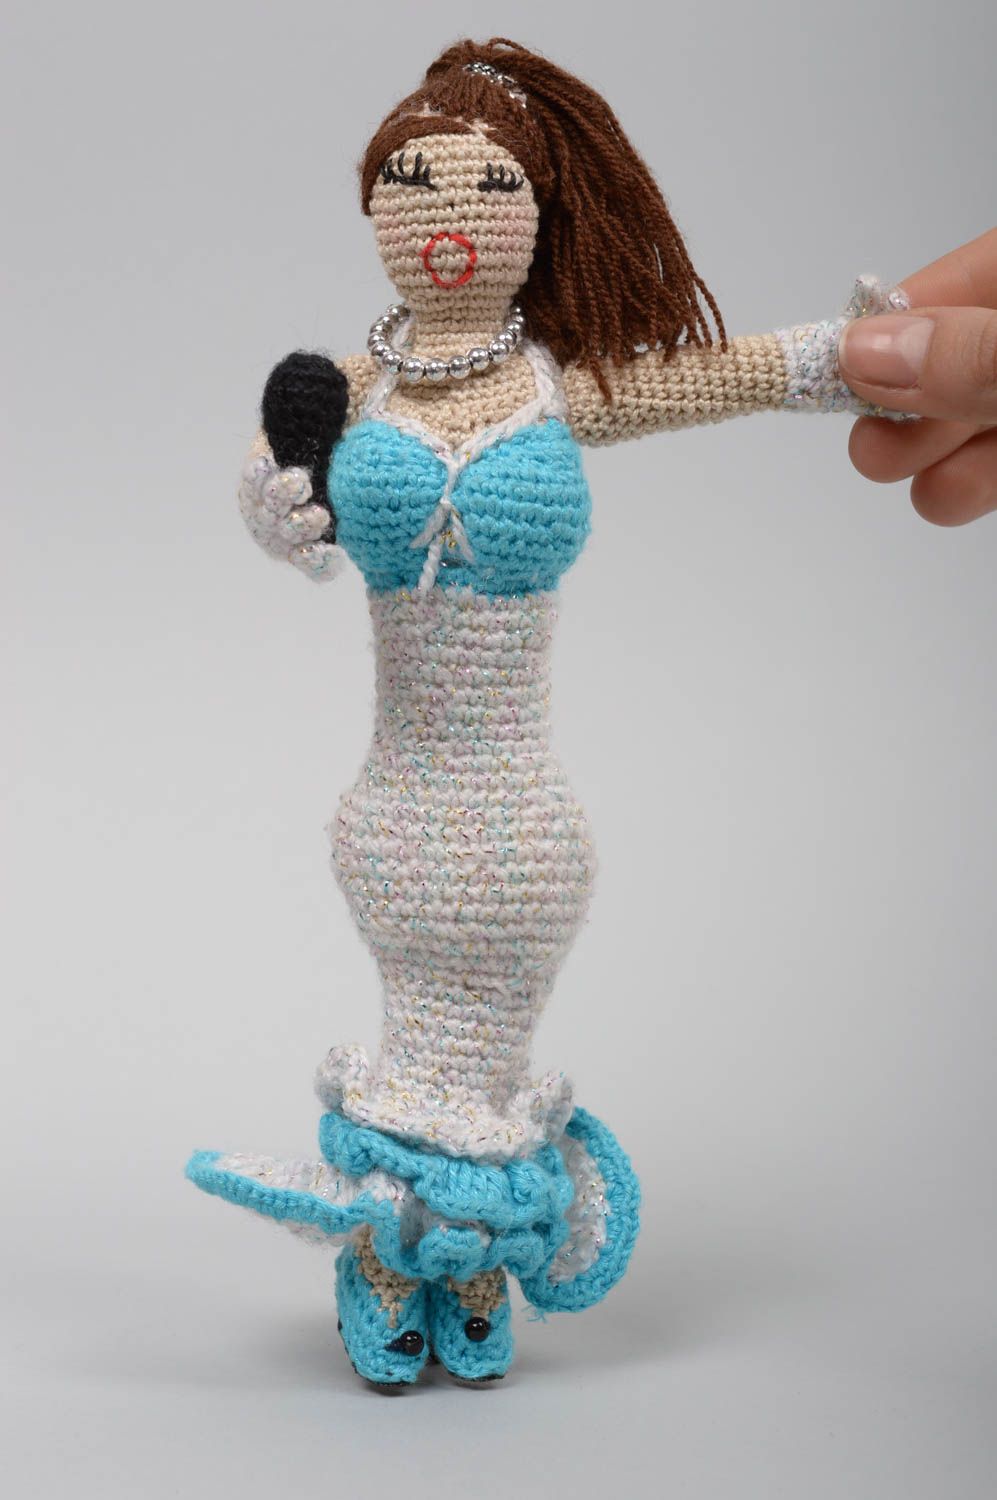 Beautiful handmade crochet toy soft doll stuffed toy room decor ideas gift ideas photo 1